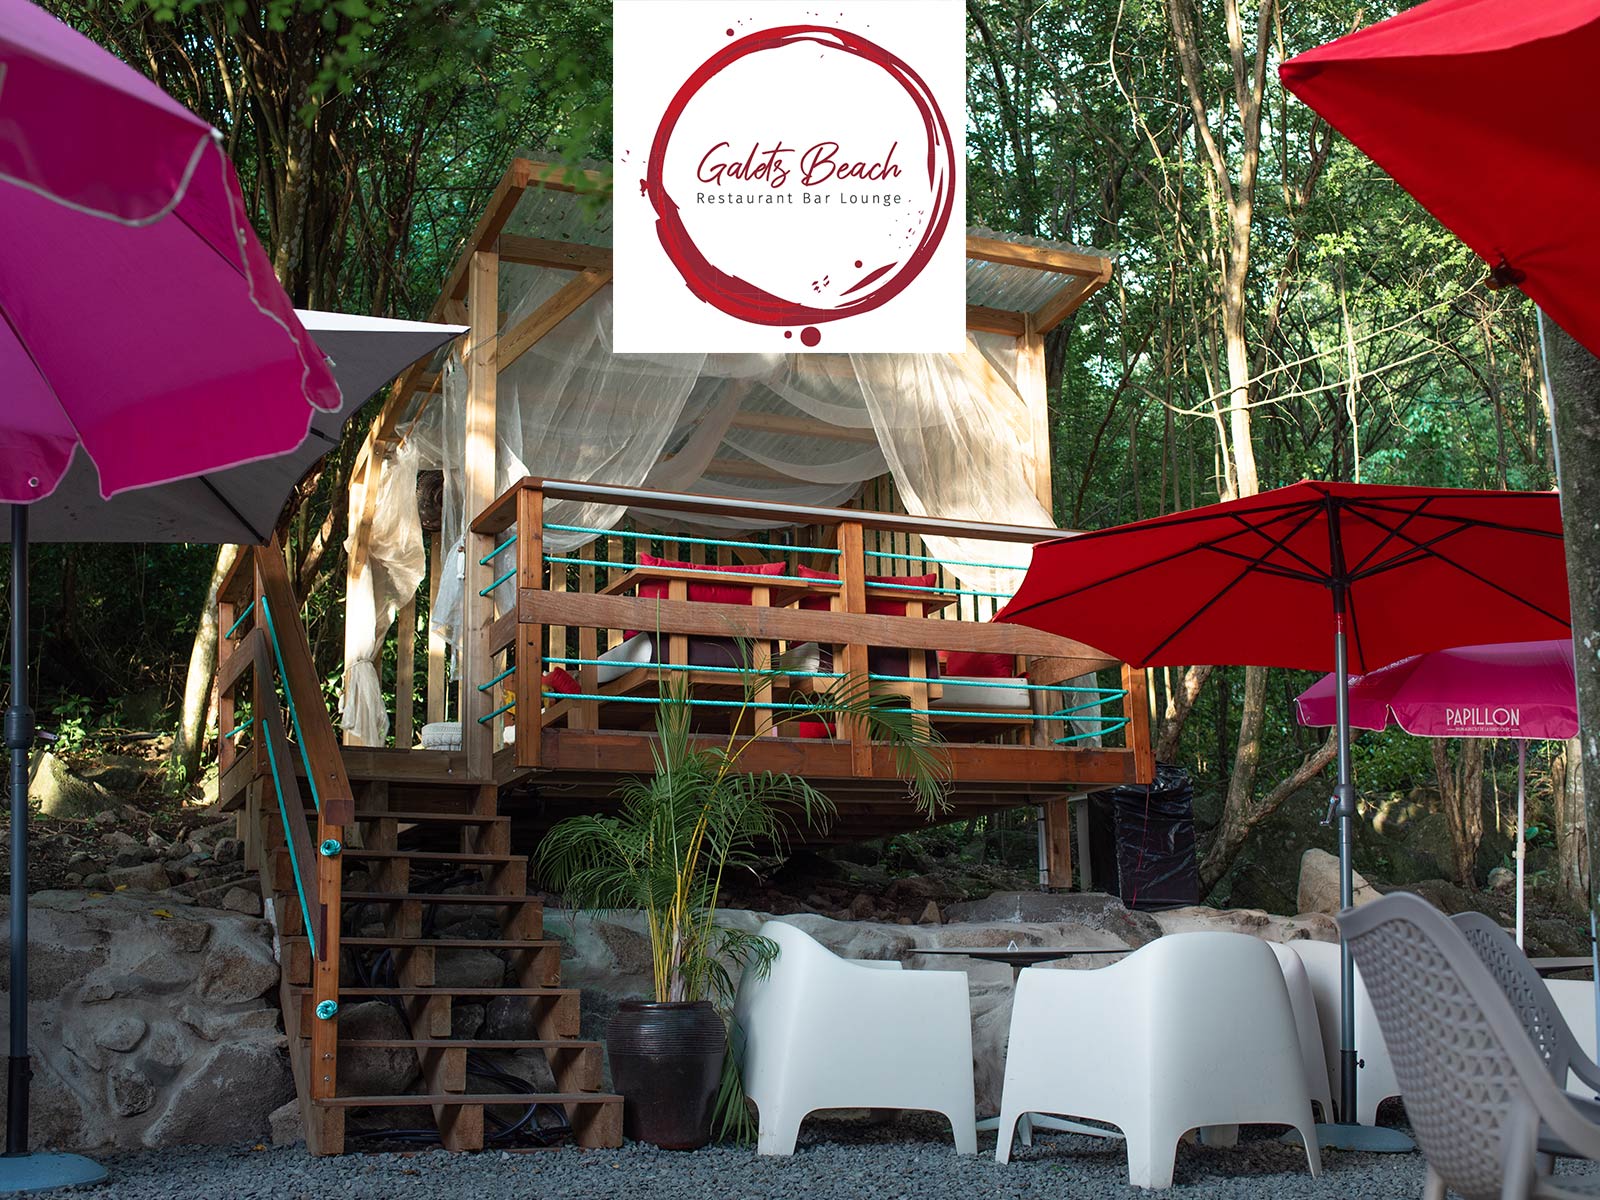 Galets Beach - Restaurant Bar Lounge